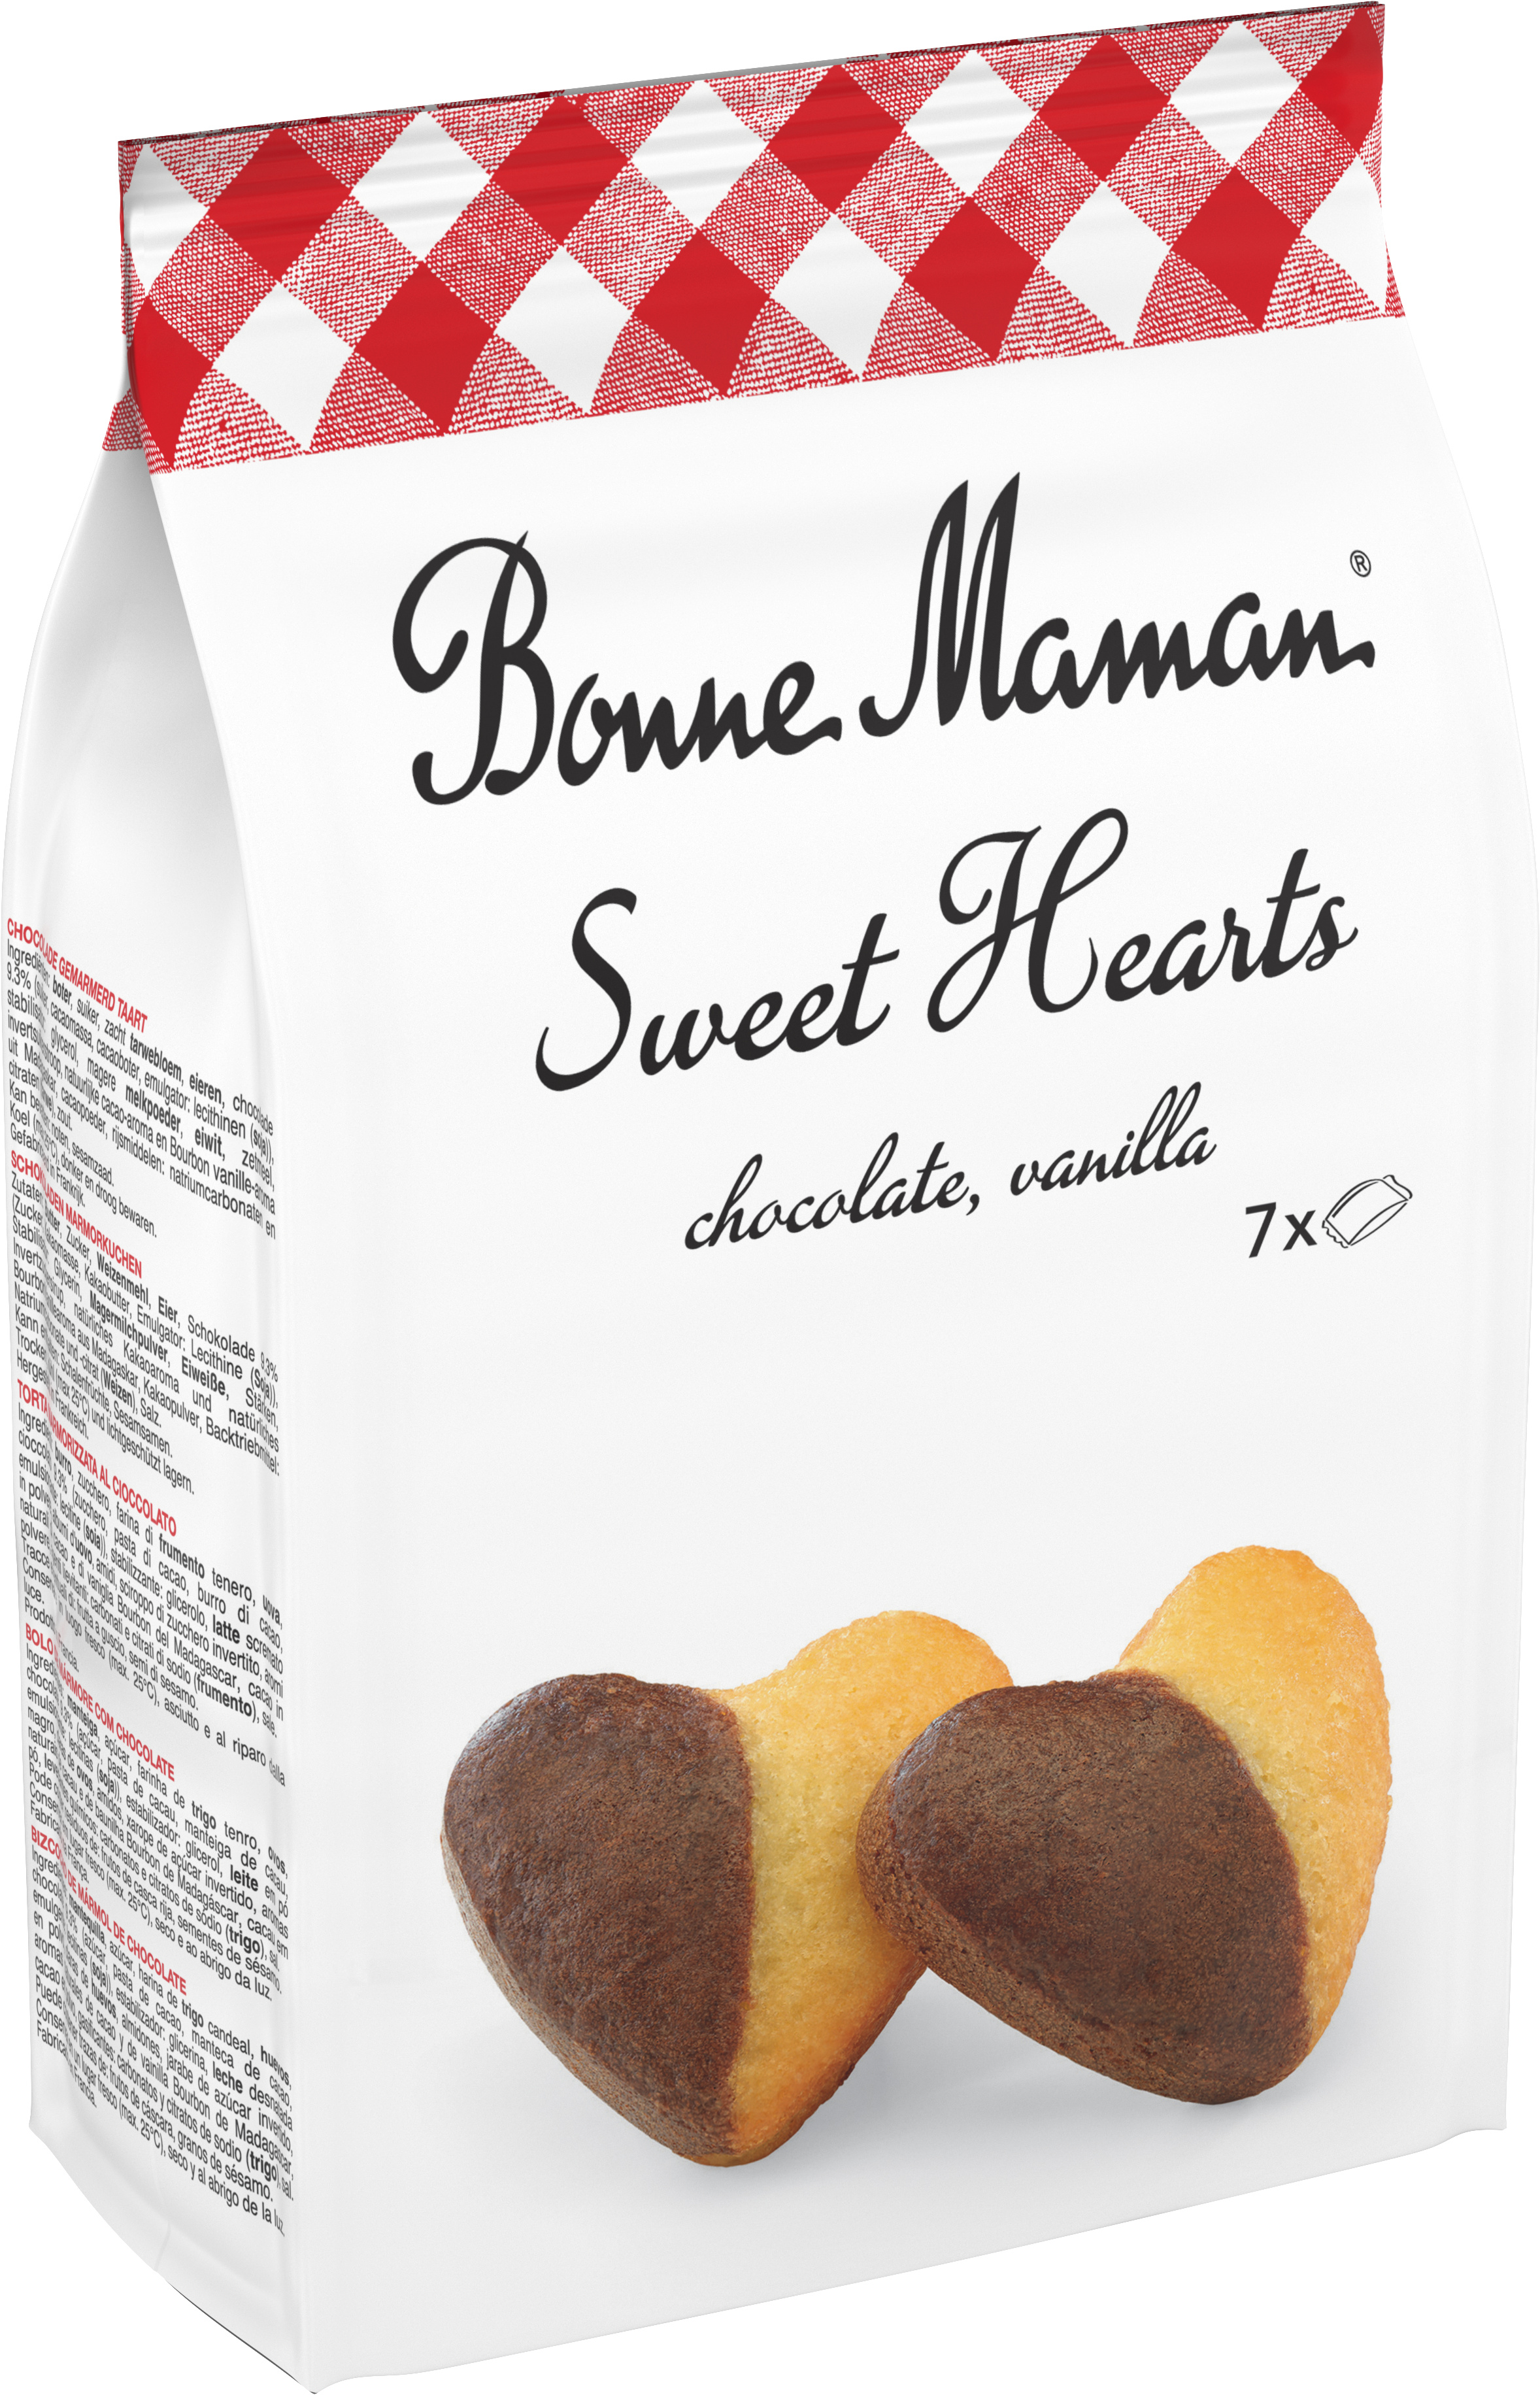 Bonne Maman Sweet Hearts Chocolate Vanille Marble Madeleines 175g